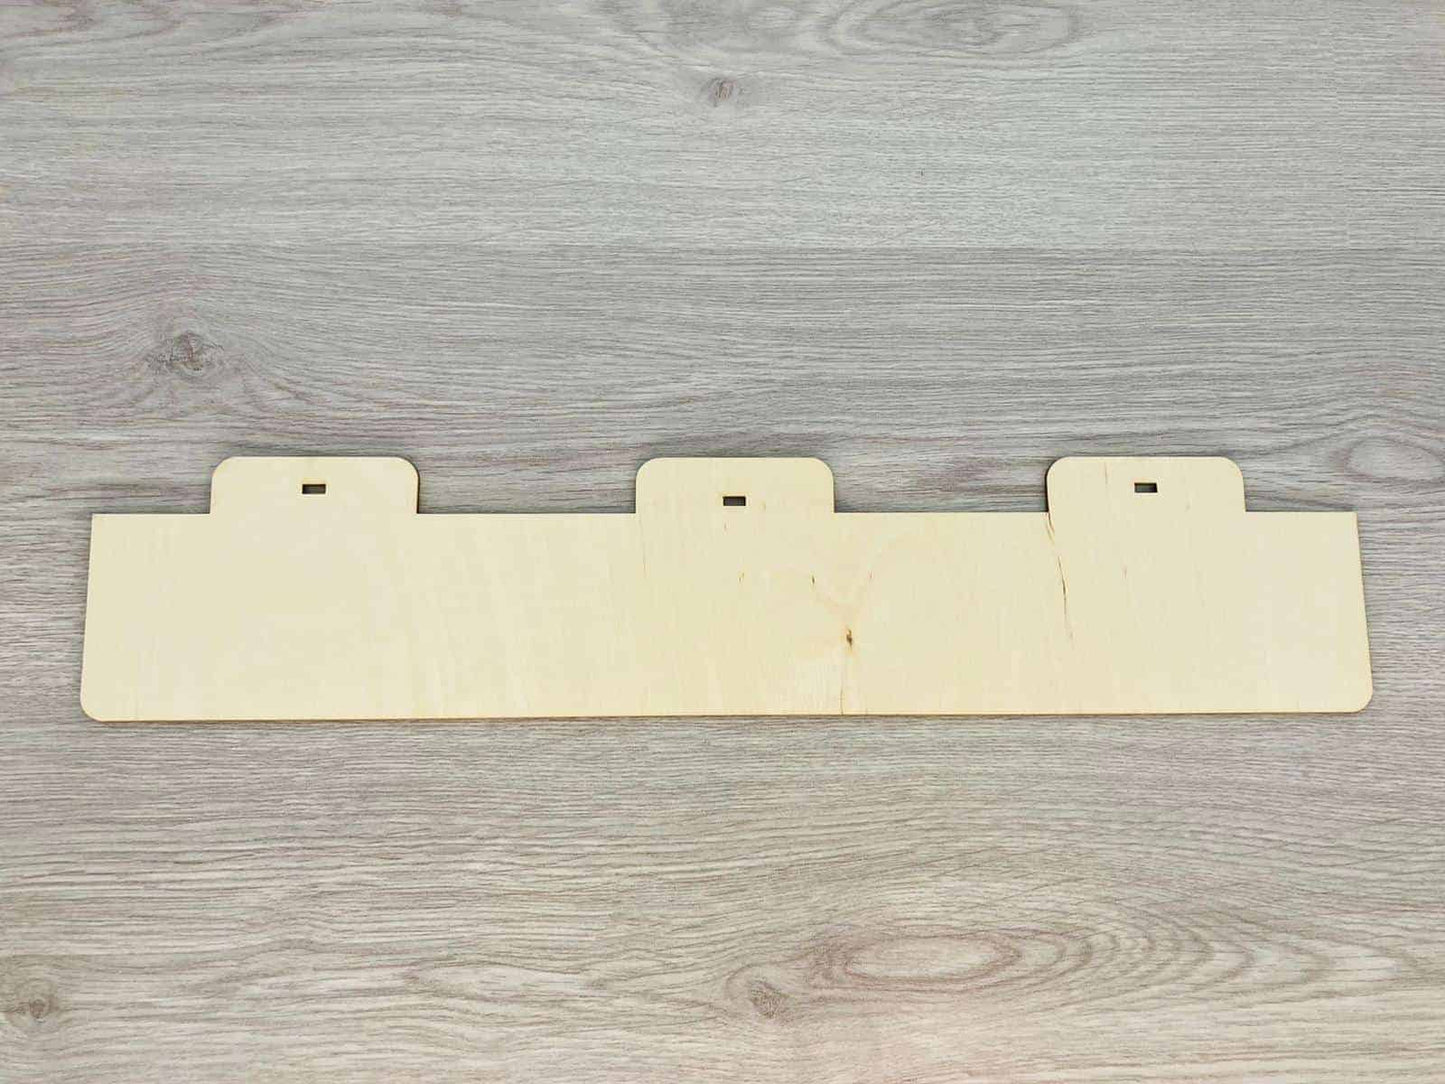 Einlegeboden Regal Display Gestell Adventskalender Holz 8cm Tiefe 16,5 - 50cm - 000058